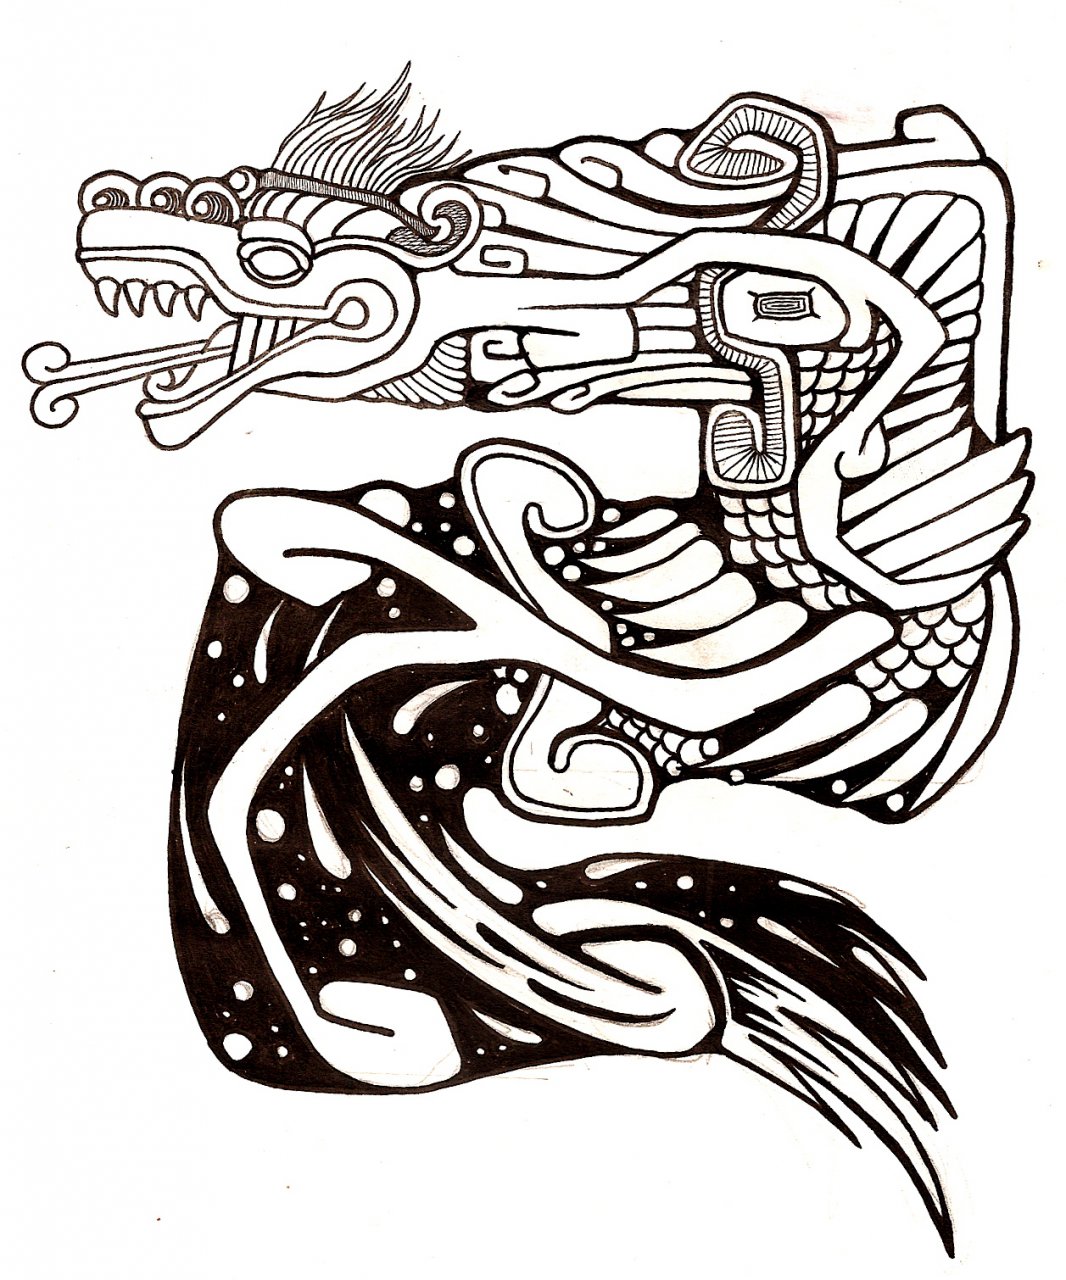 quetzalcoatl tattoo design